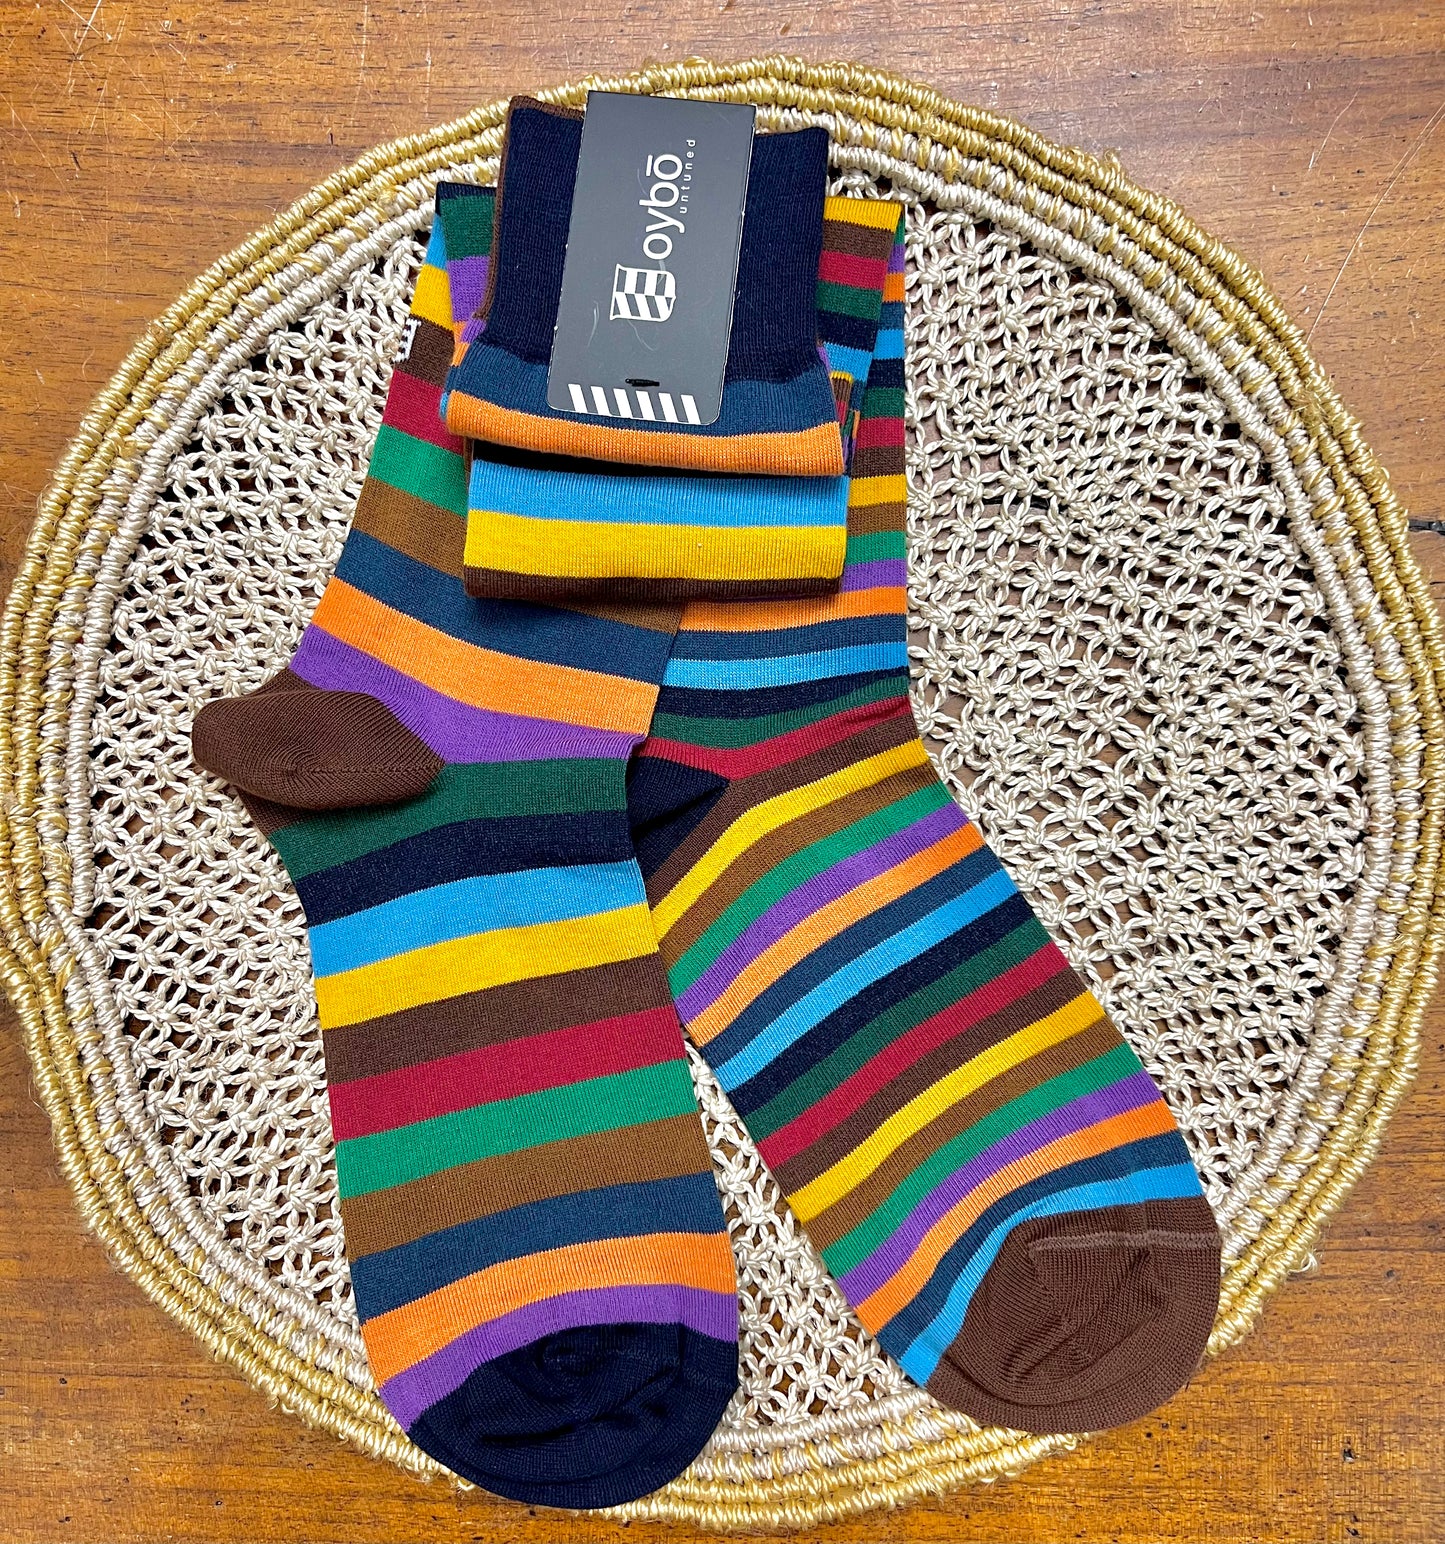 Calzini alti Spaiati Oybo’ Untuned Socks  Stripes